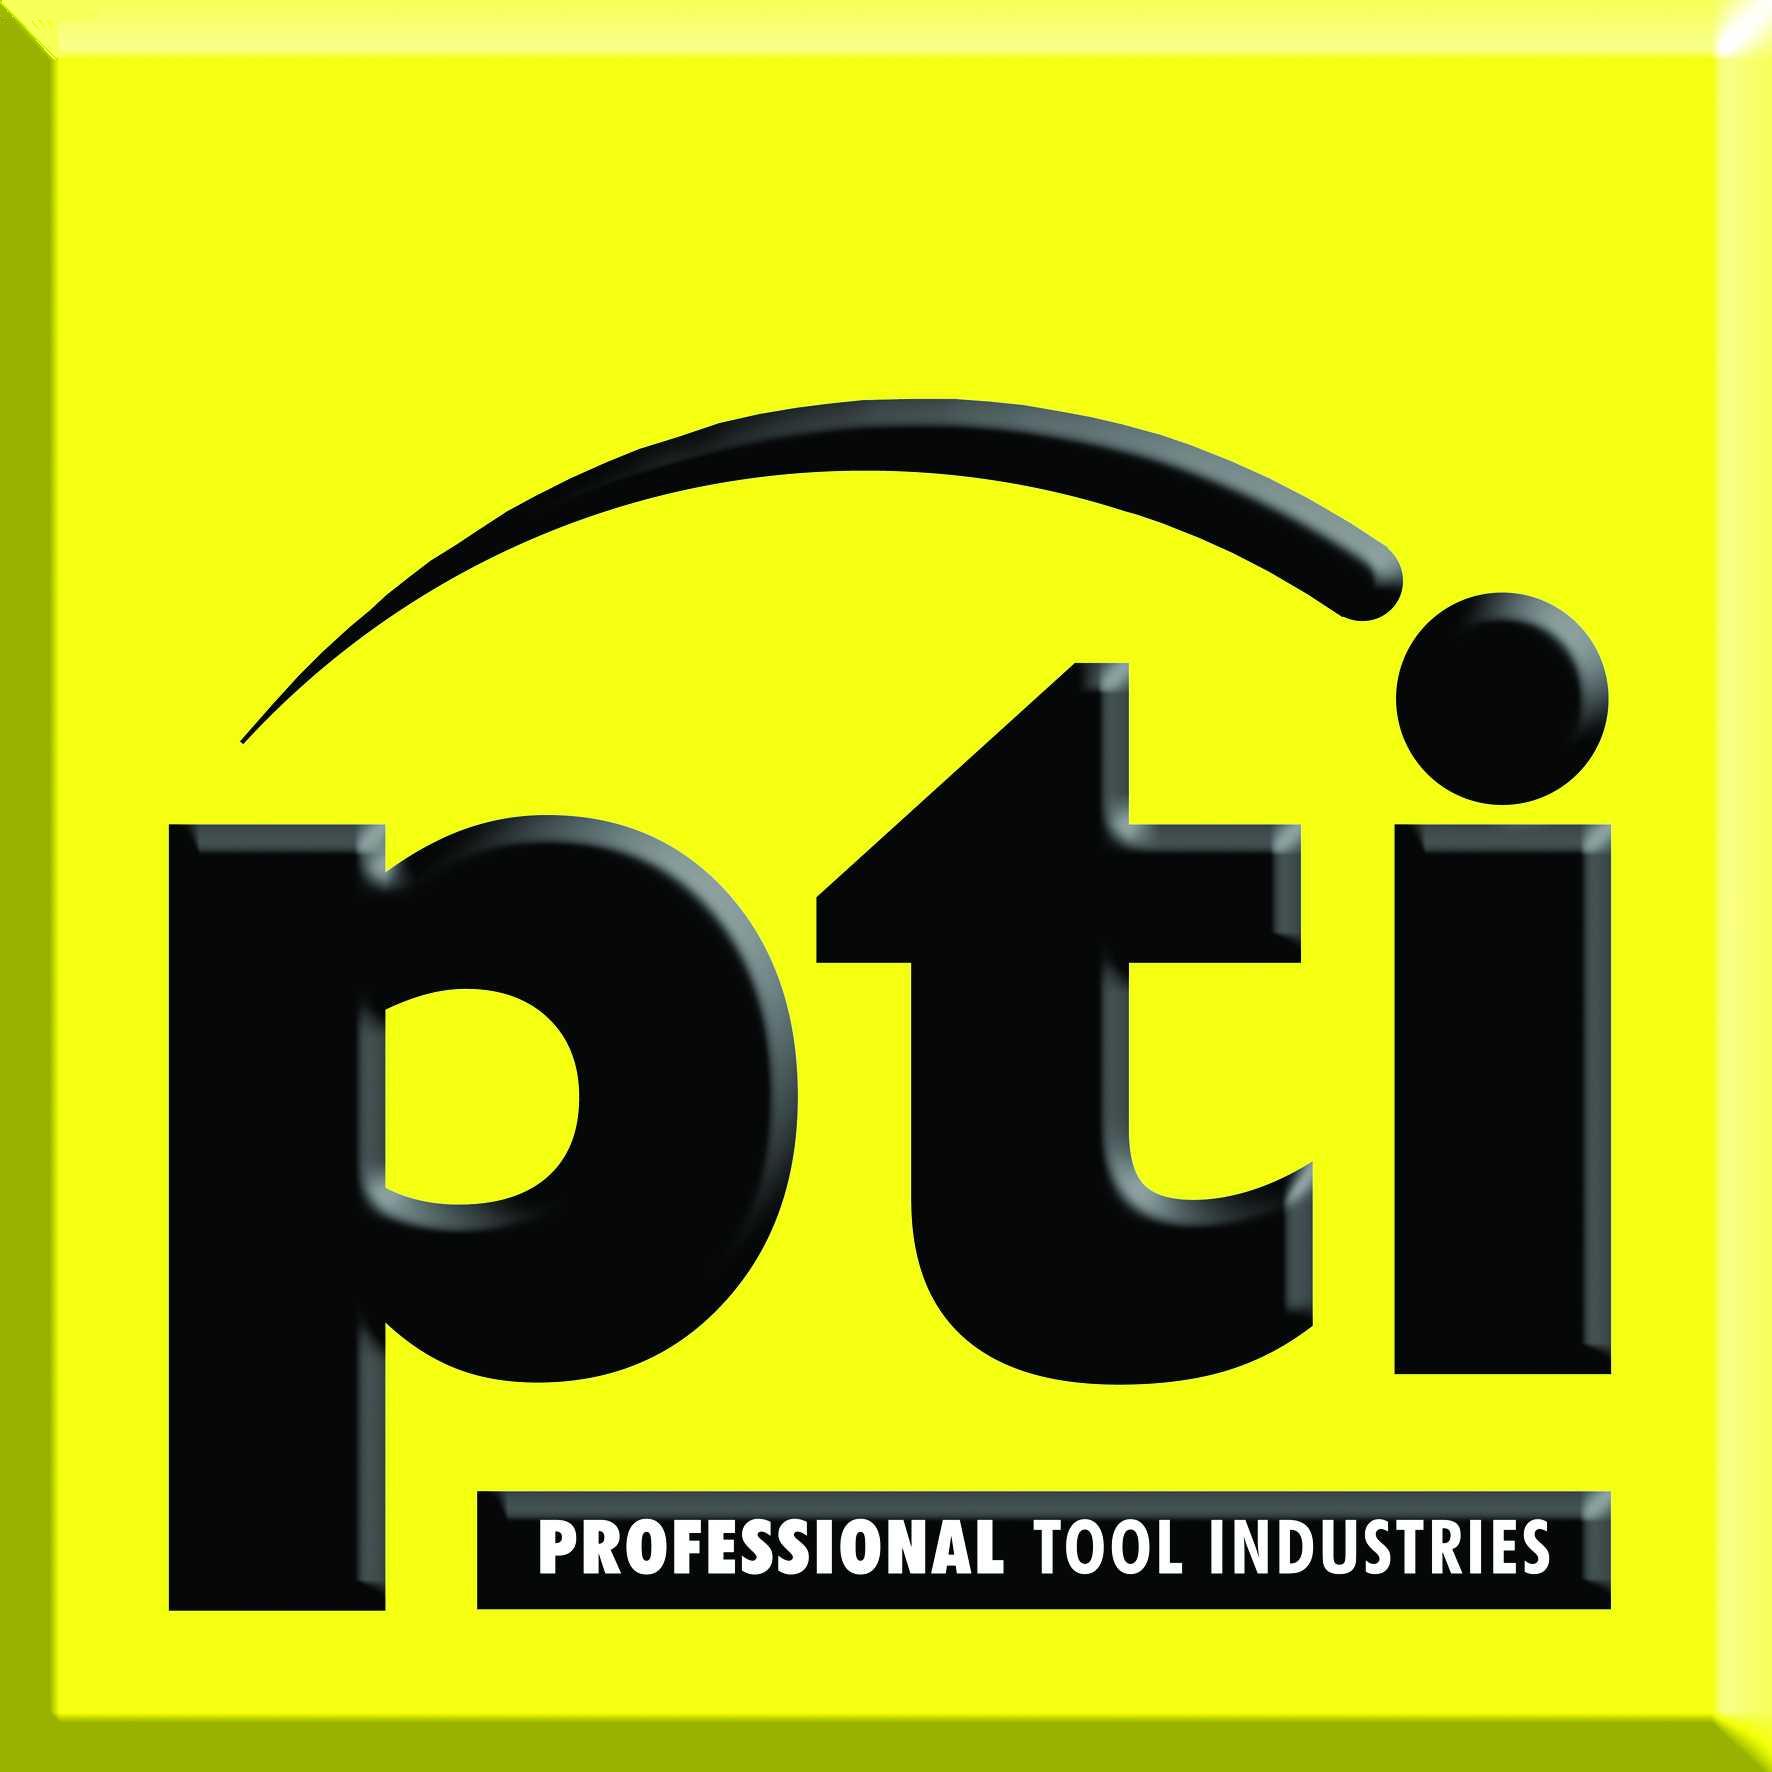 Professional Tool Industries